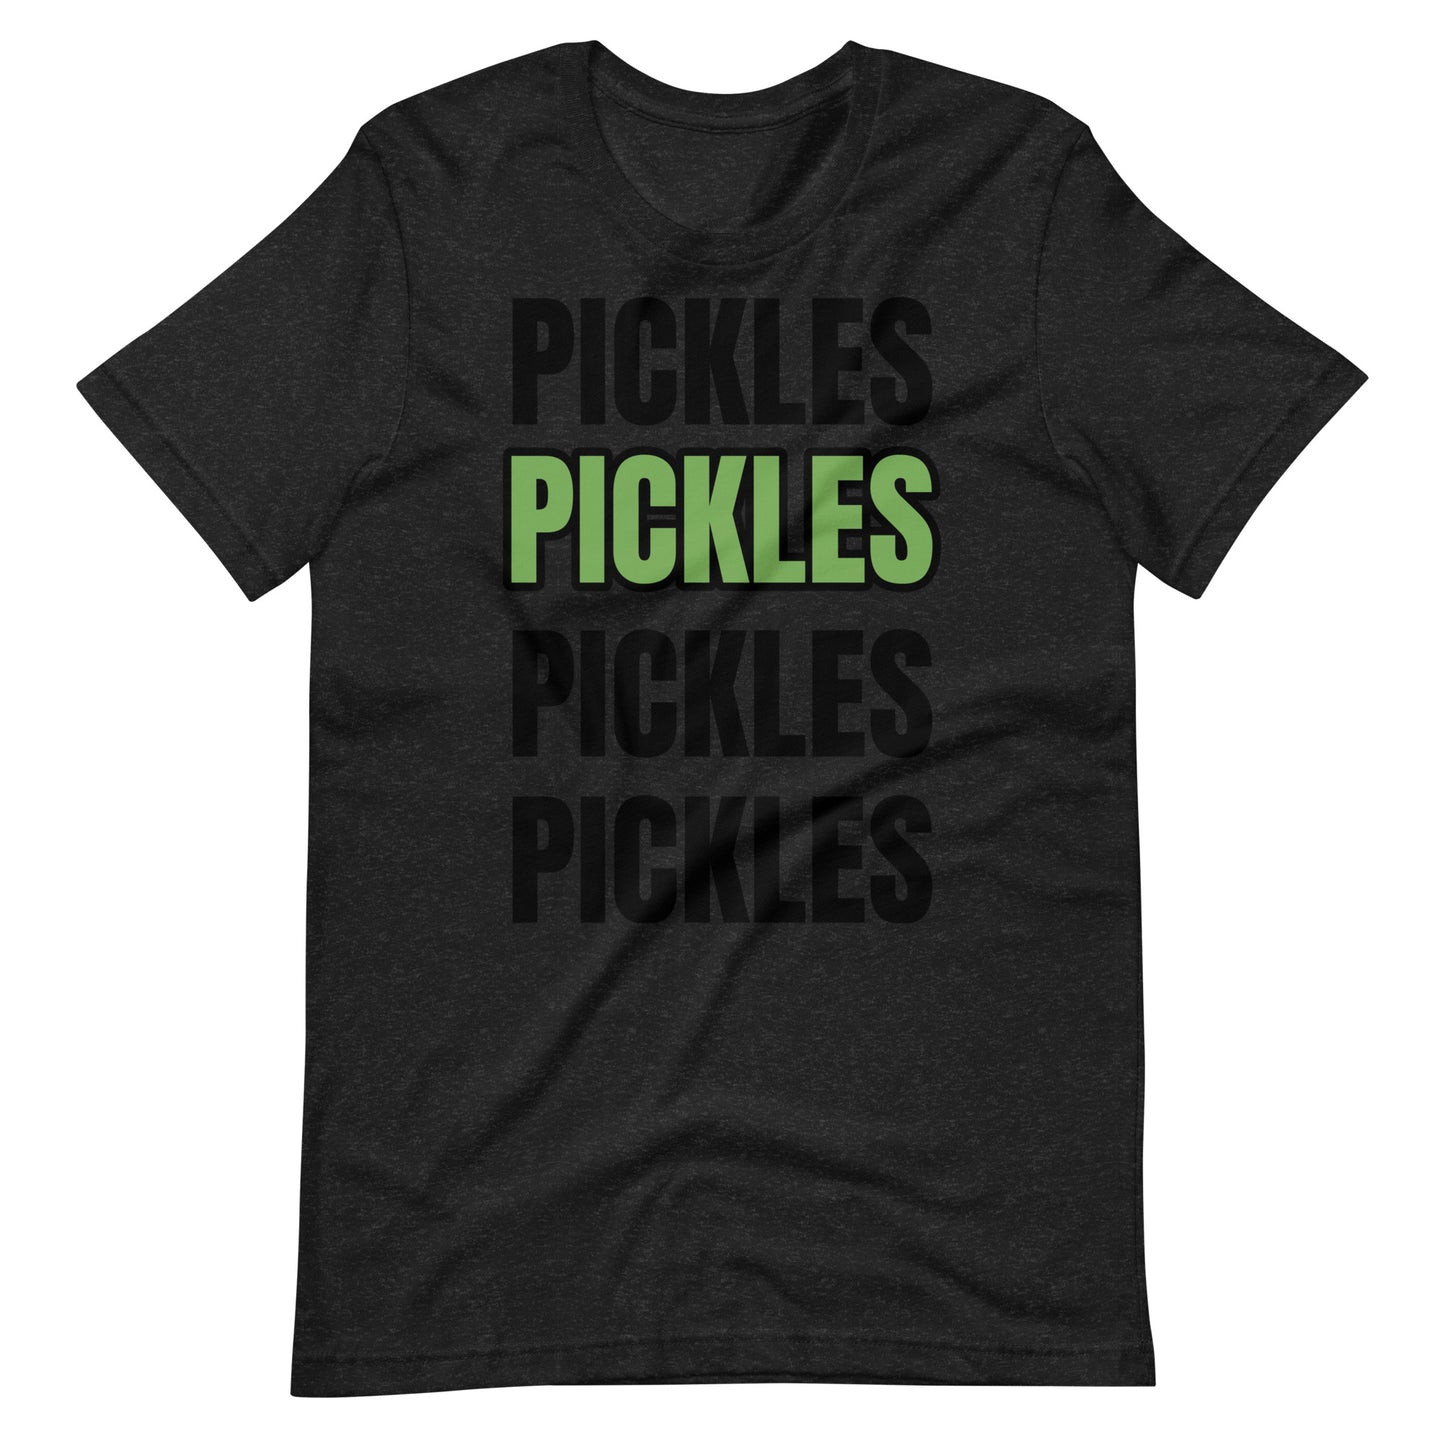 Pickles T-Shirt